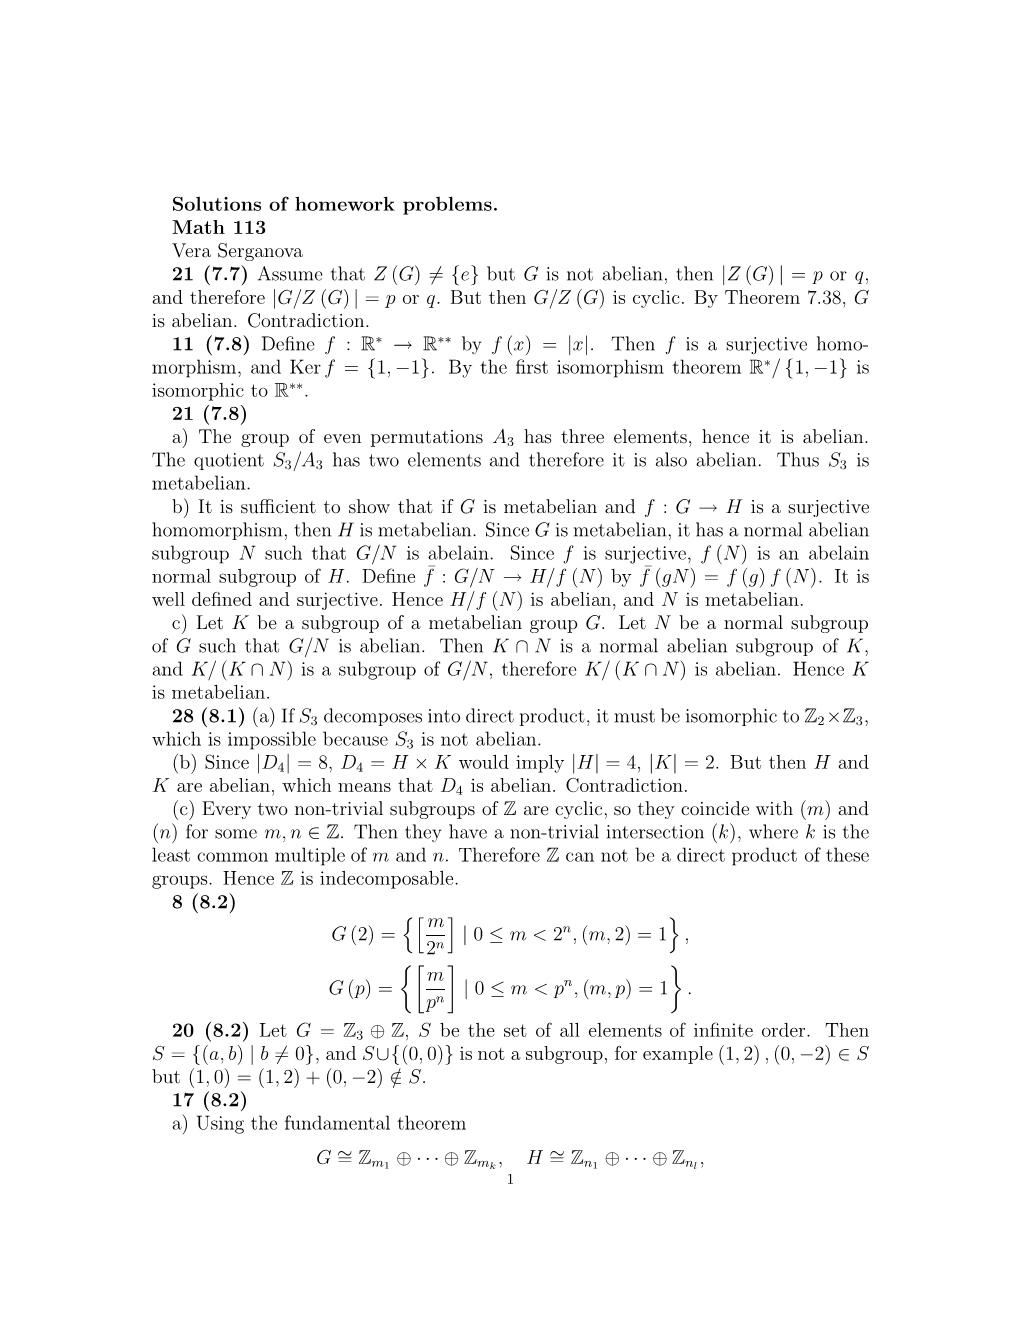 Solutions of Homework Problems. Math 113 Vera Serganova 21 (7.7